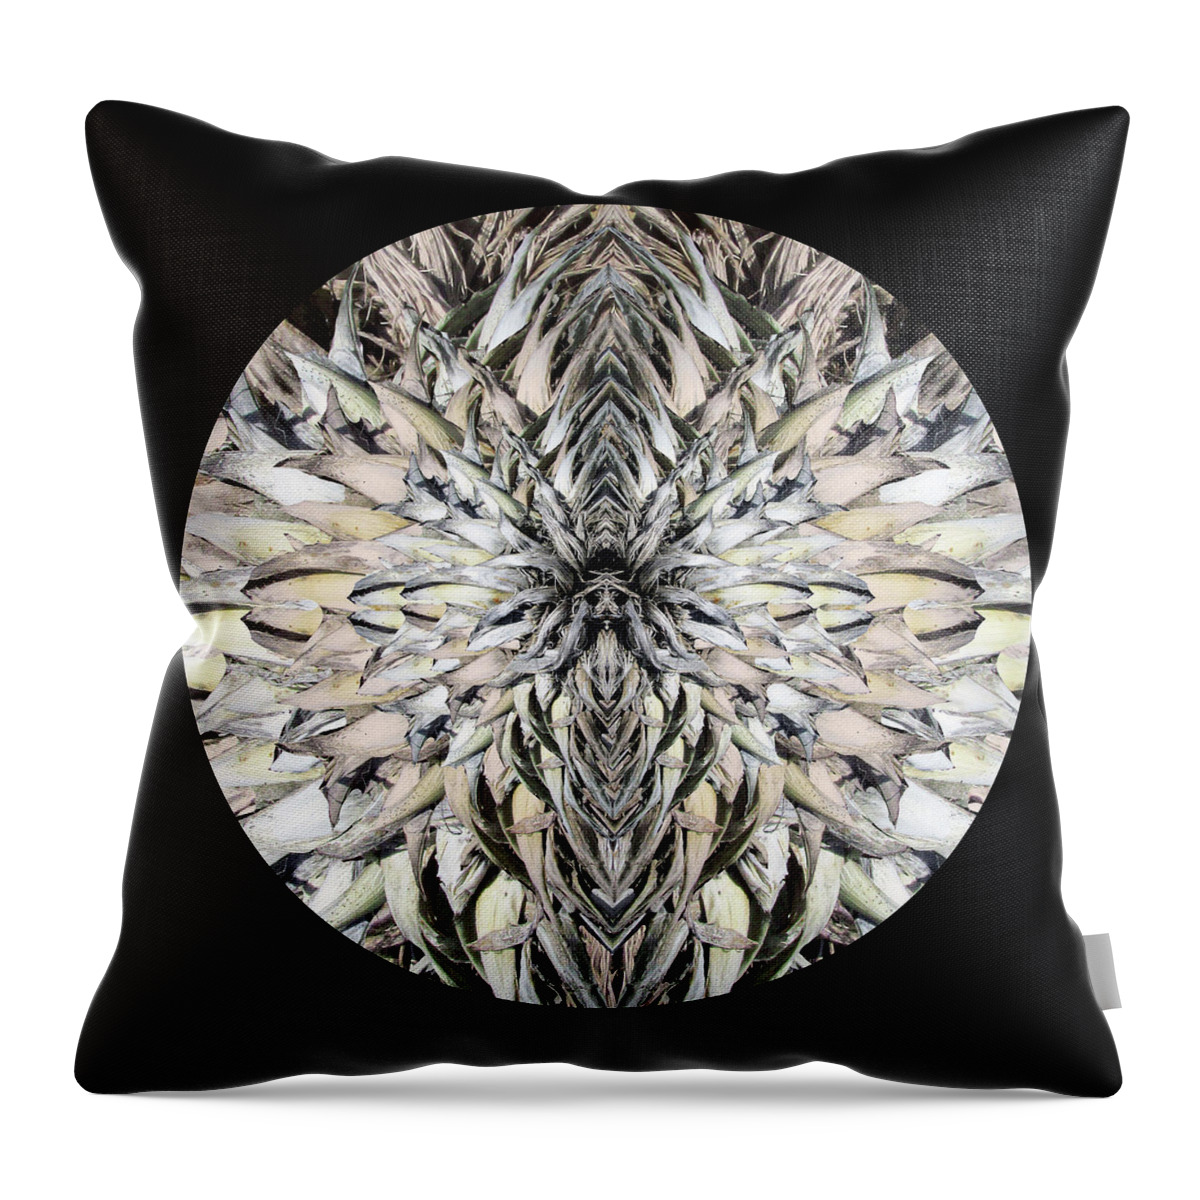 Bronze Flower Throw Pillow featuring the digital art Winged Praying Figure Kaleidoscope by Julia L Wright